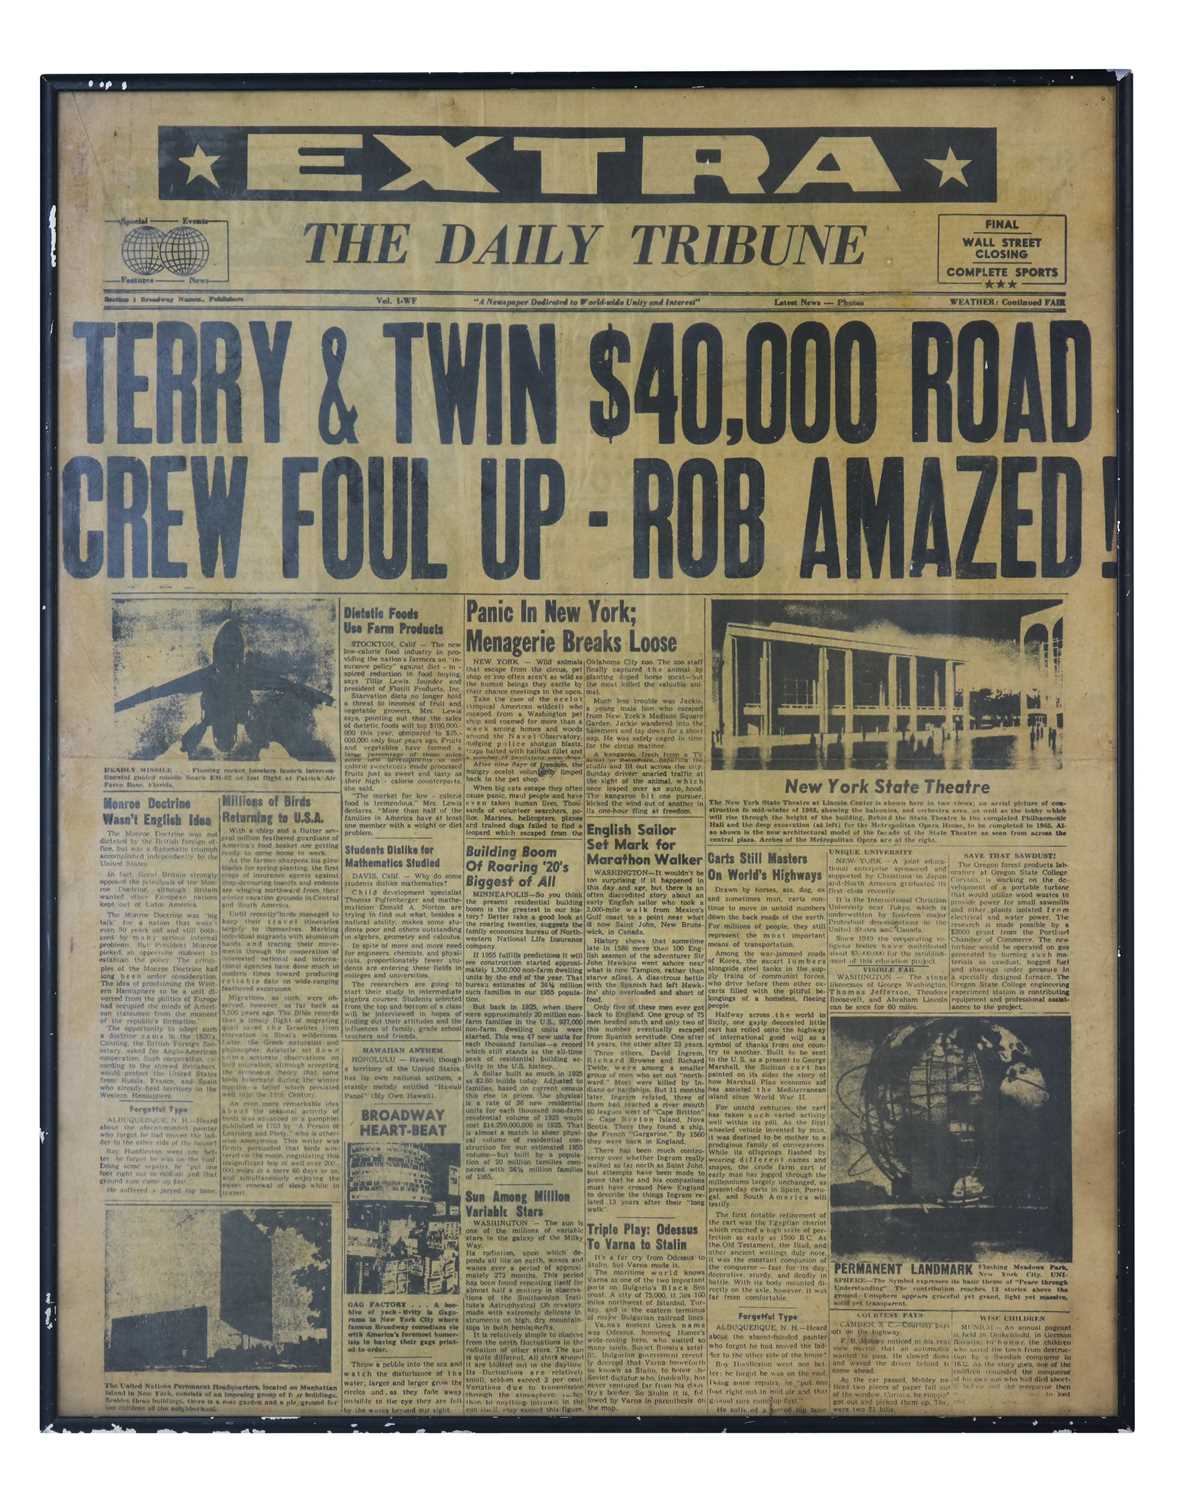 TERRY AND TWINNY NEWSPAPER HEADLINE, FRAMED